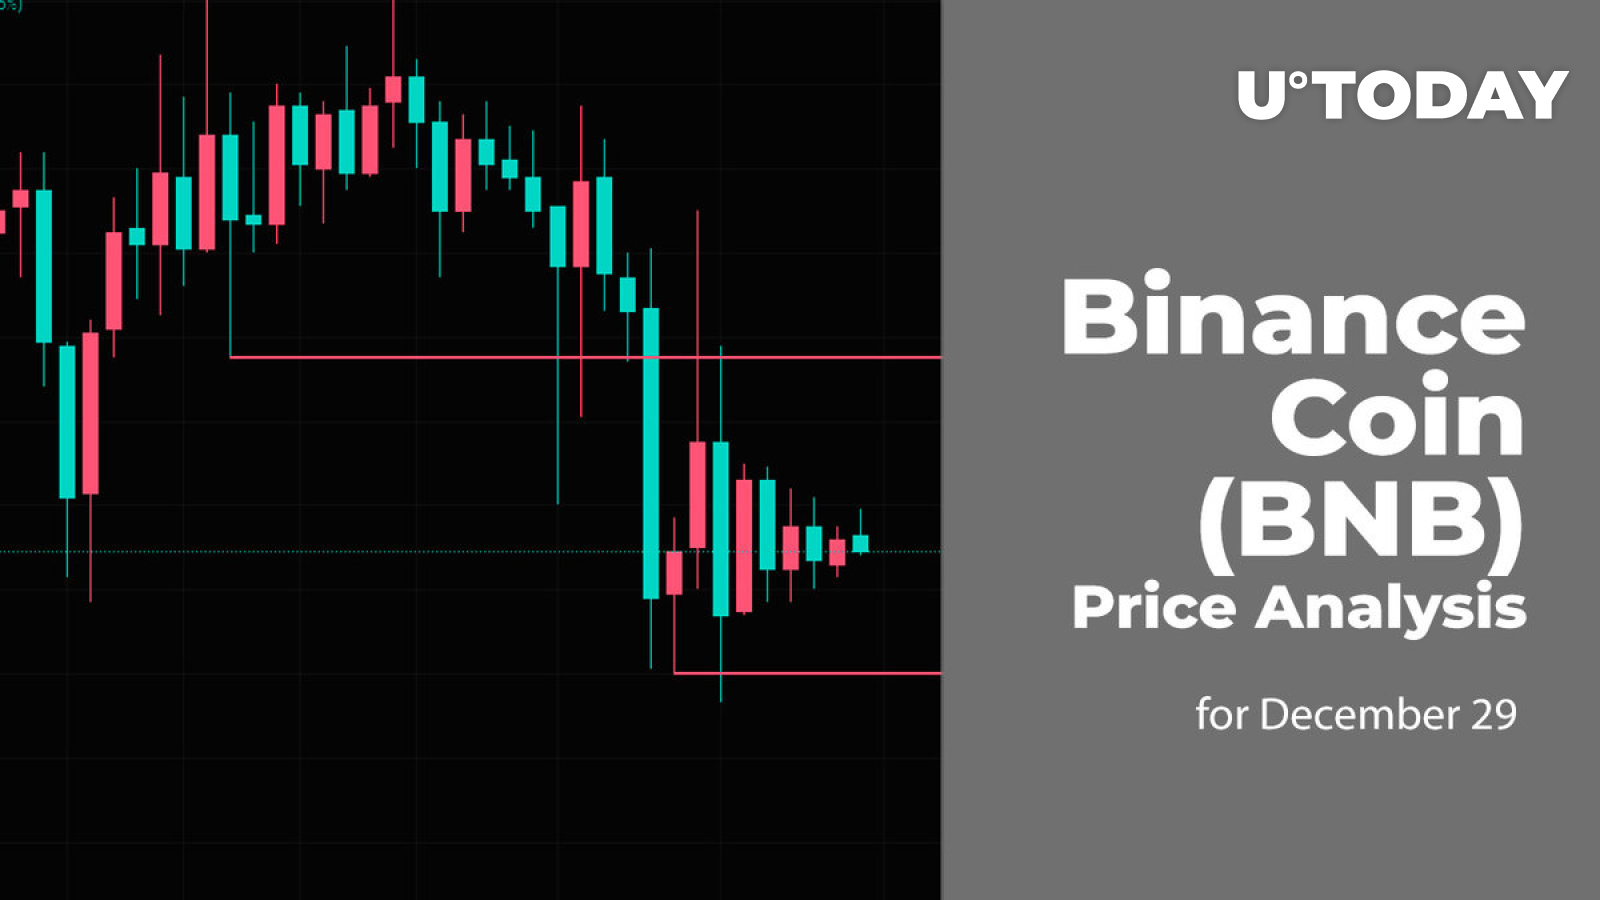 Binance Coin (BNB) Price Analysis for December 29